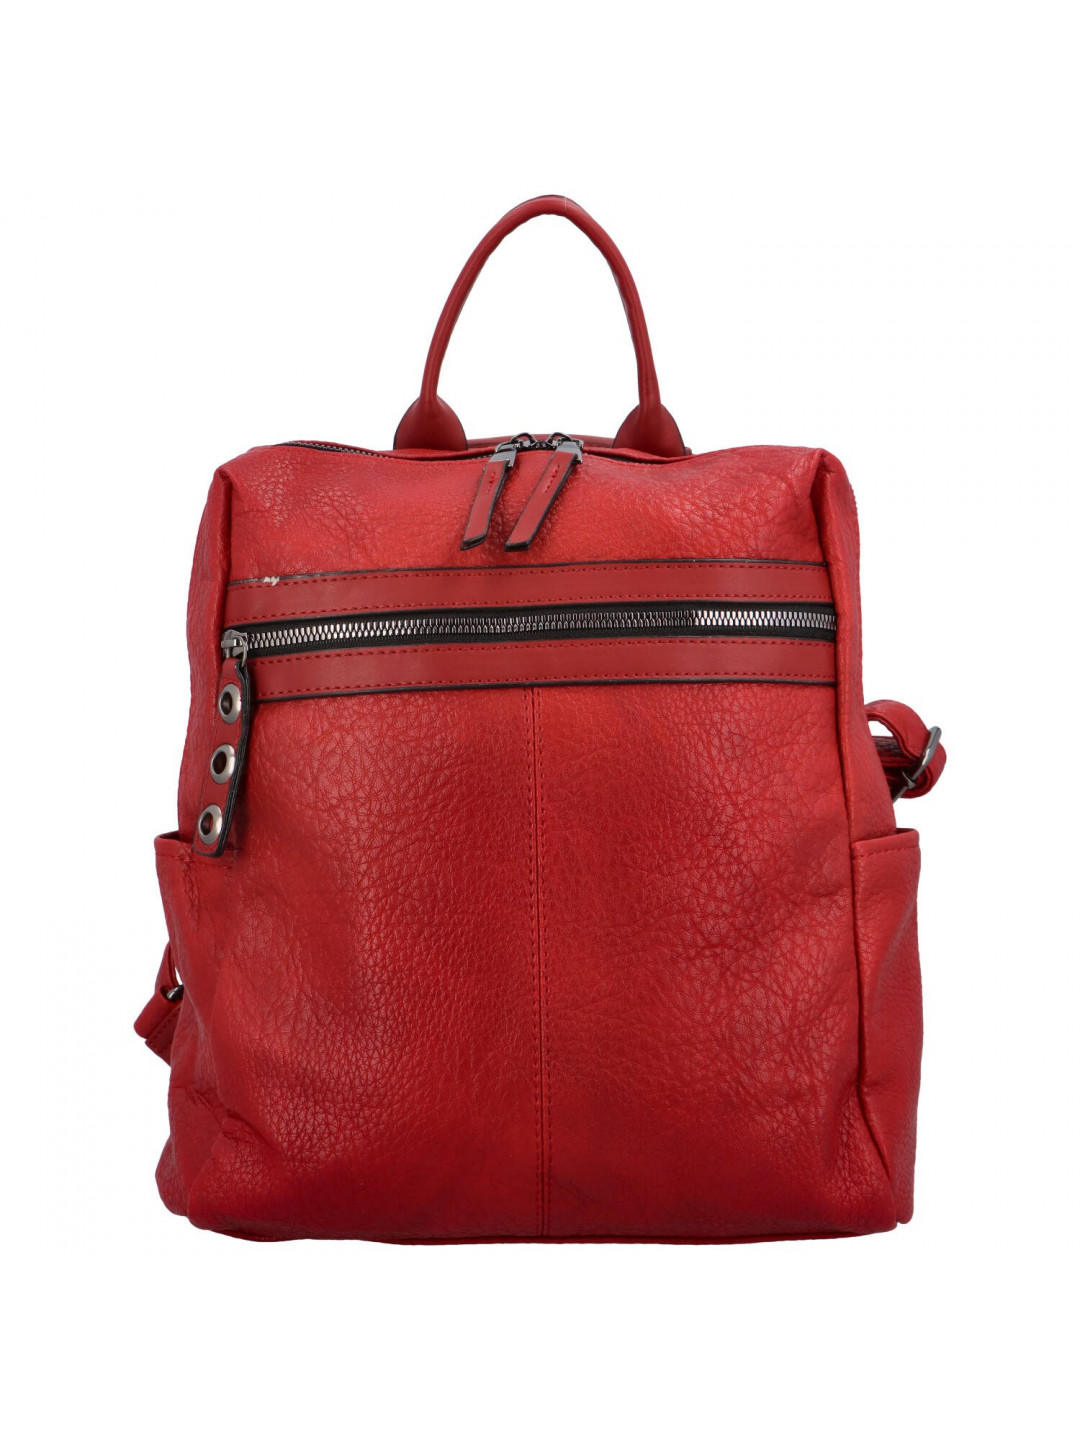 Trendový dámský koženkový batůžek Barry červená